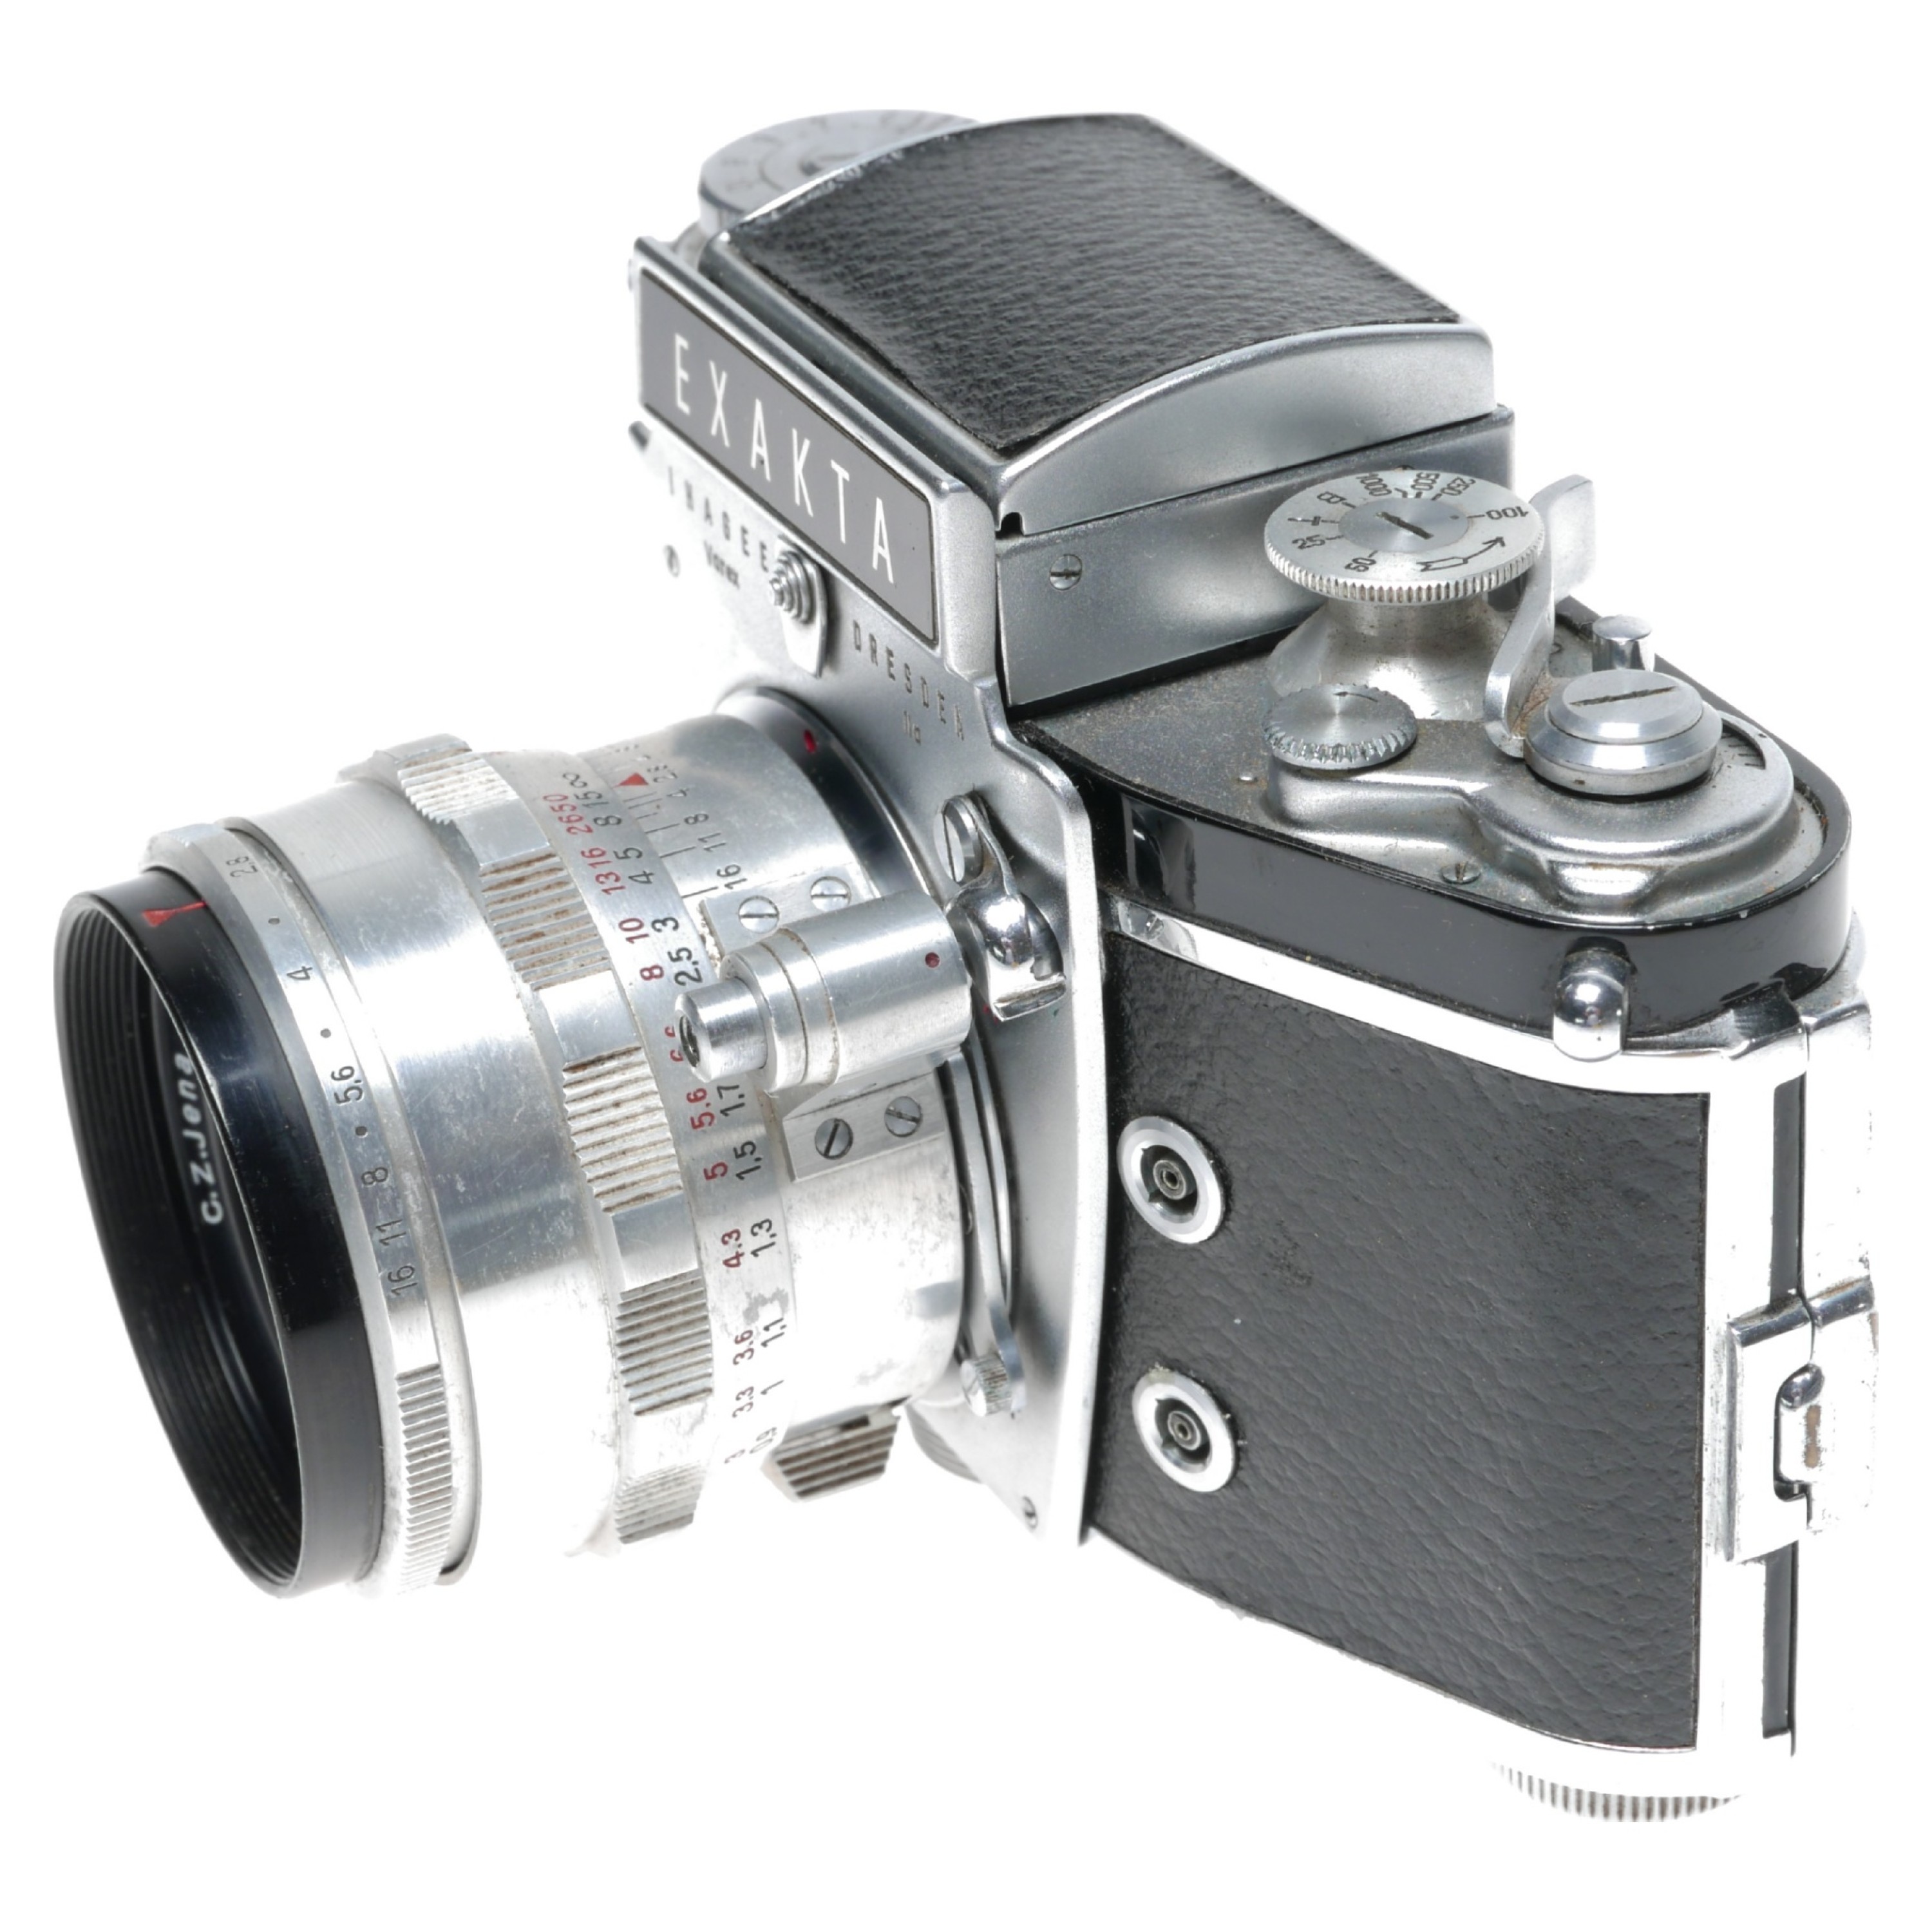 EXA Tessar 2,8/50mm Carl Zeiss JENA EXA /Exakta Classic-Camera-Store DRESDEN 